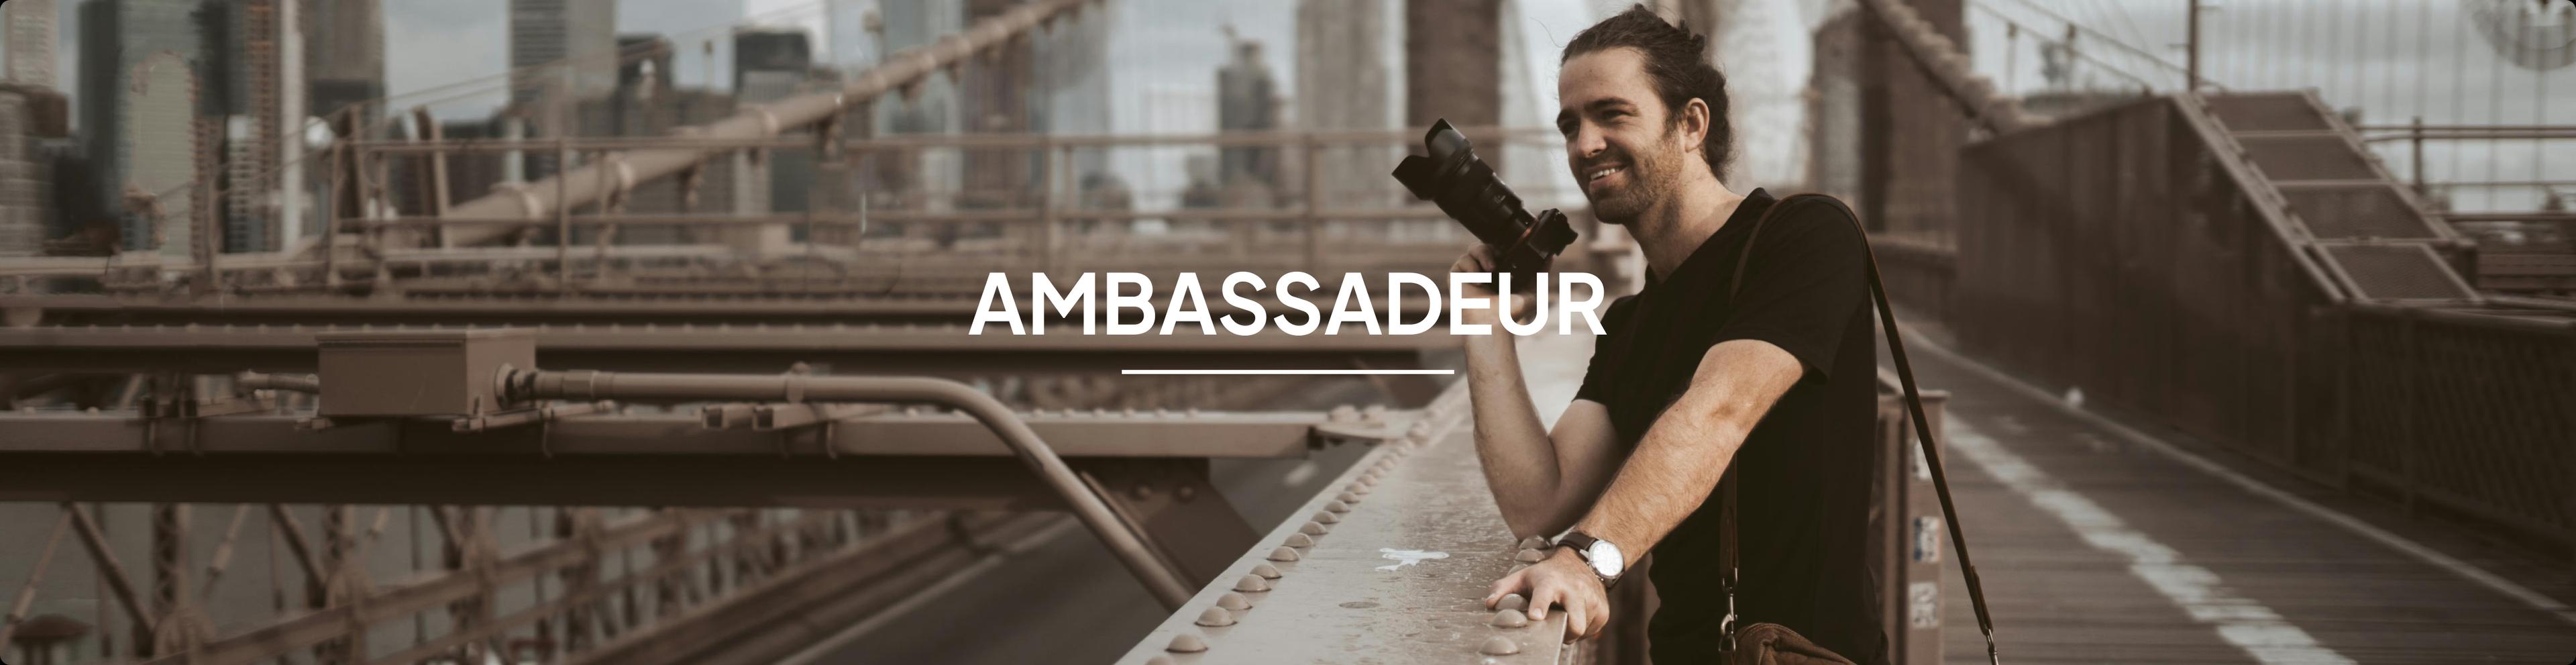 become-ambassador-header